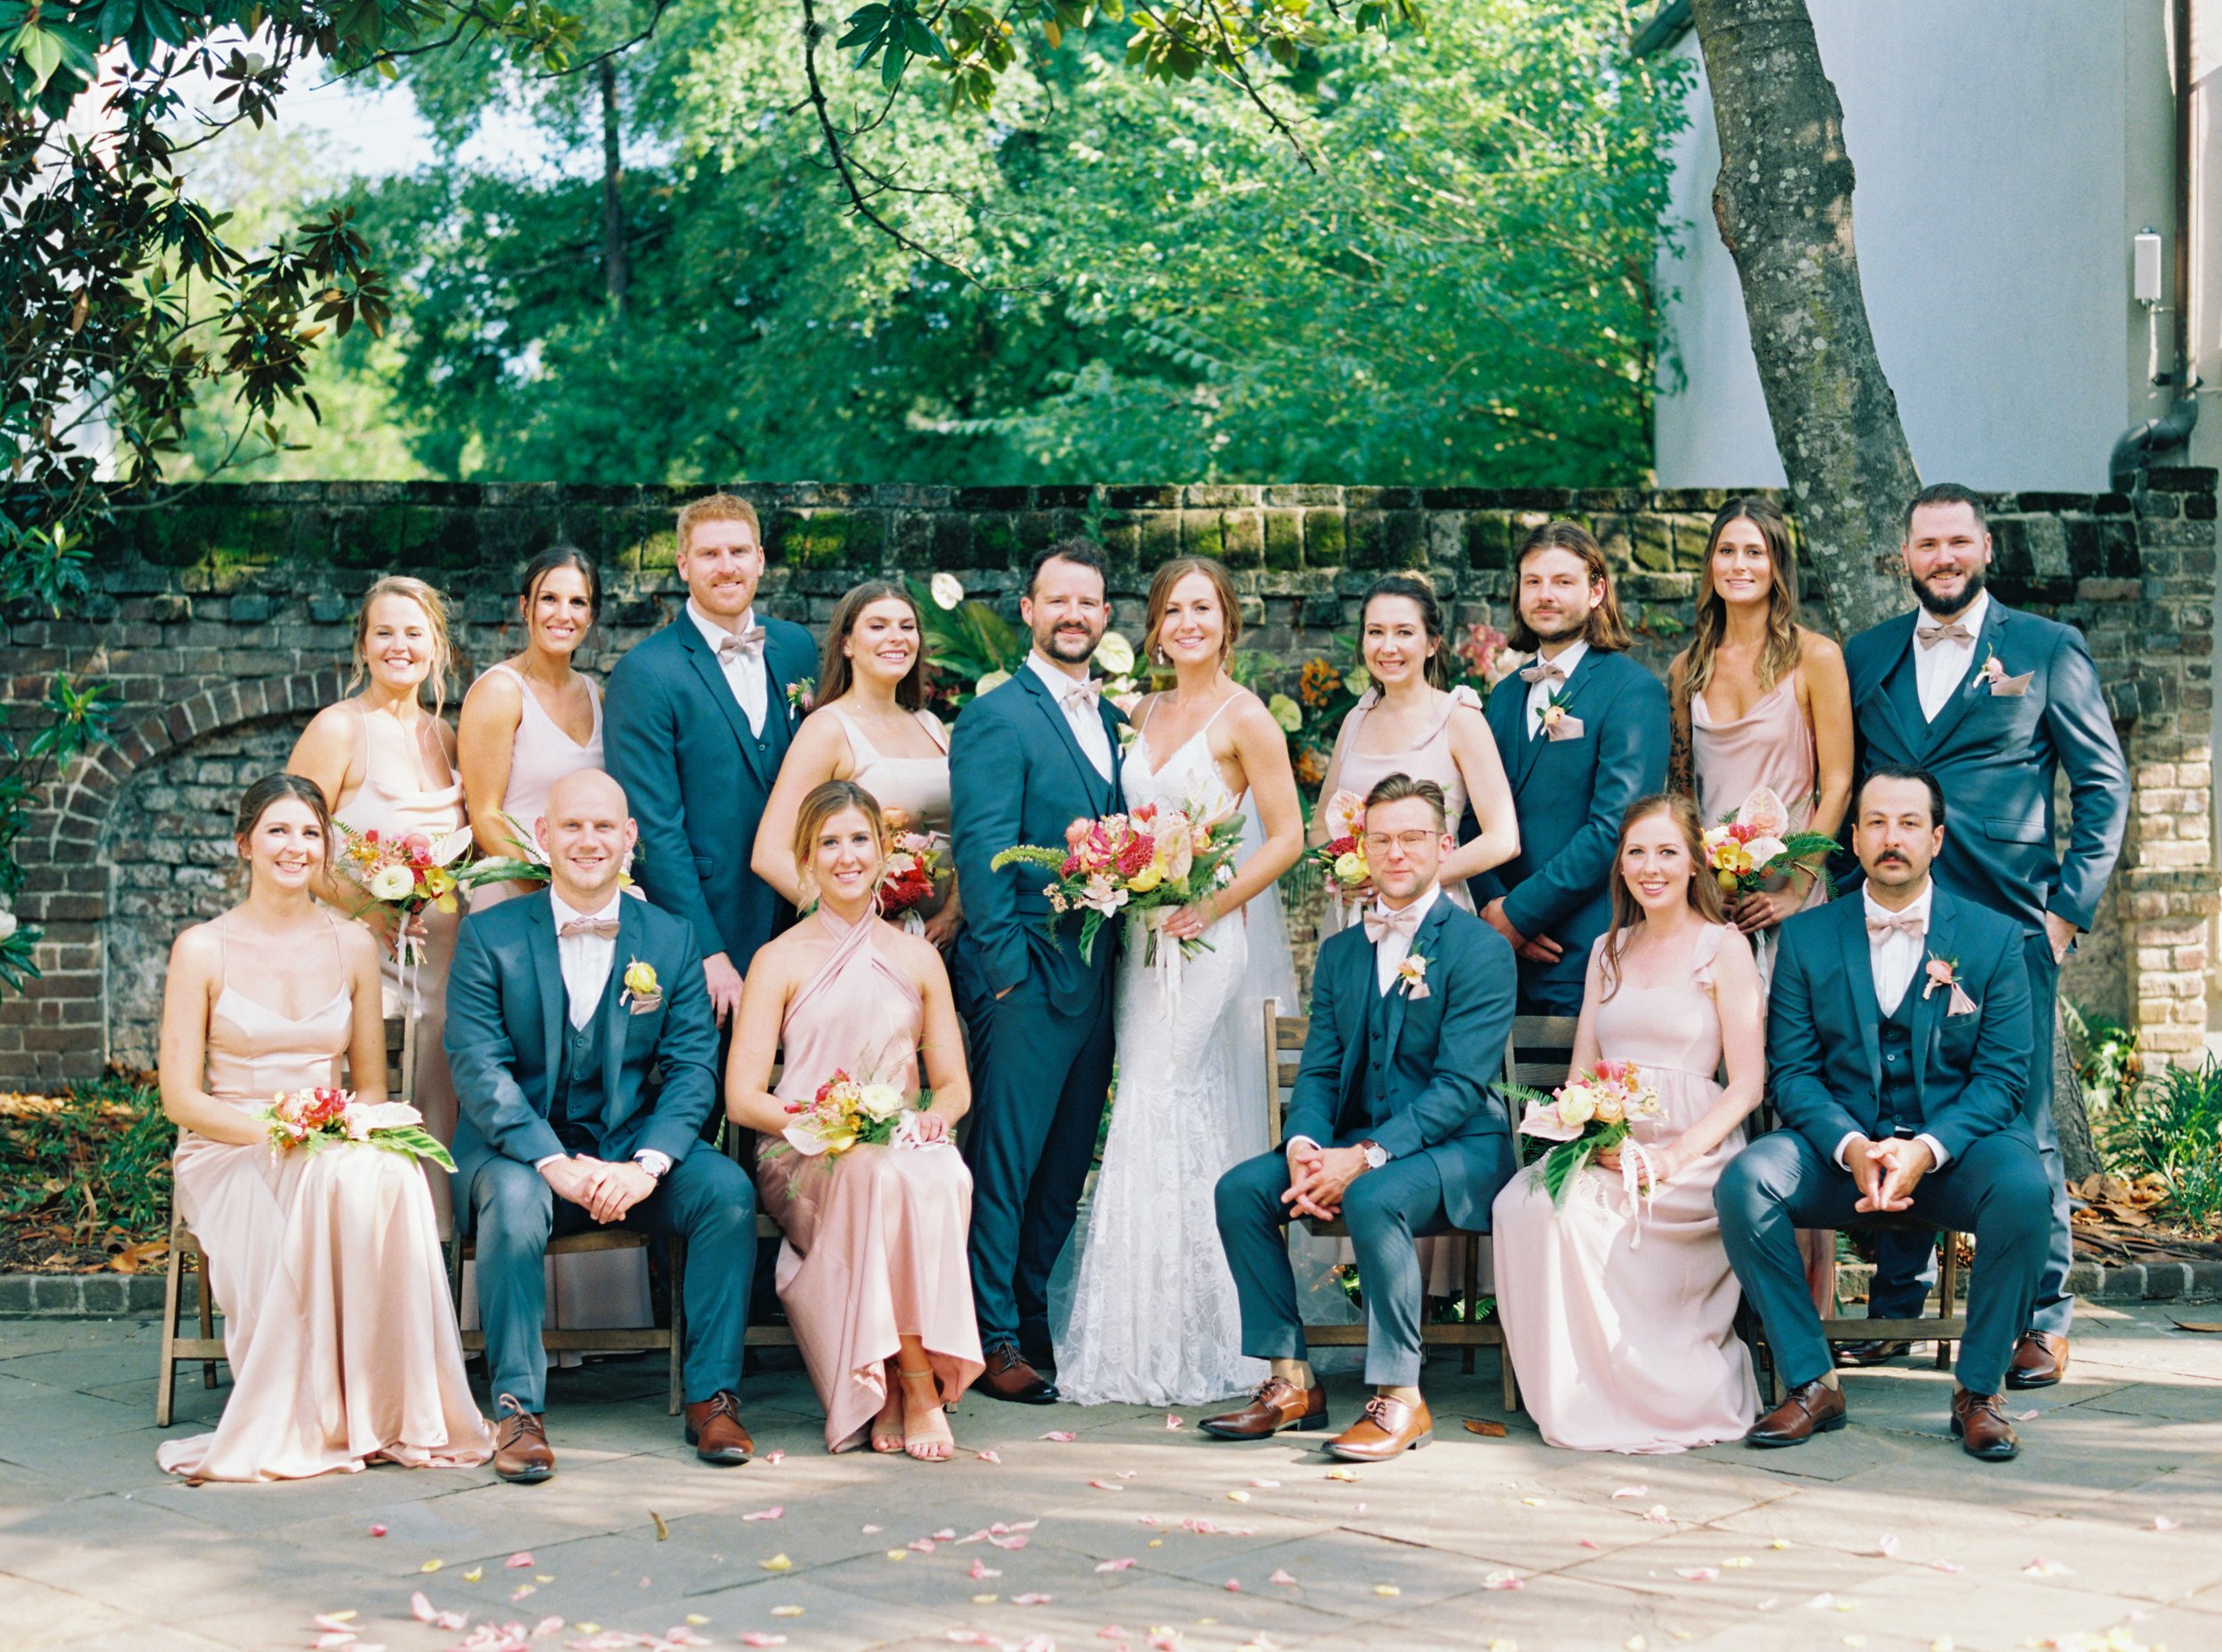 Full bridal party group photo at Gadsden House.